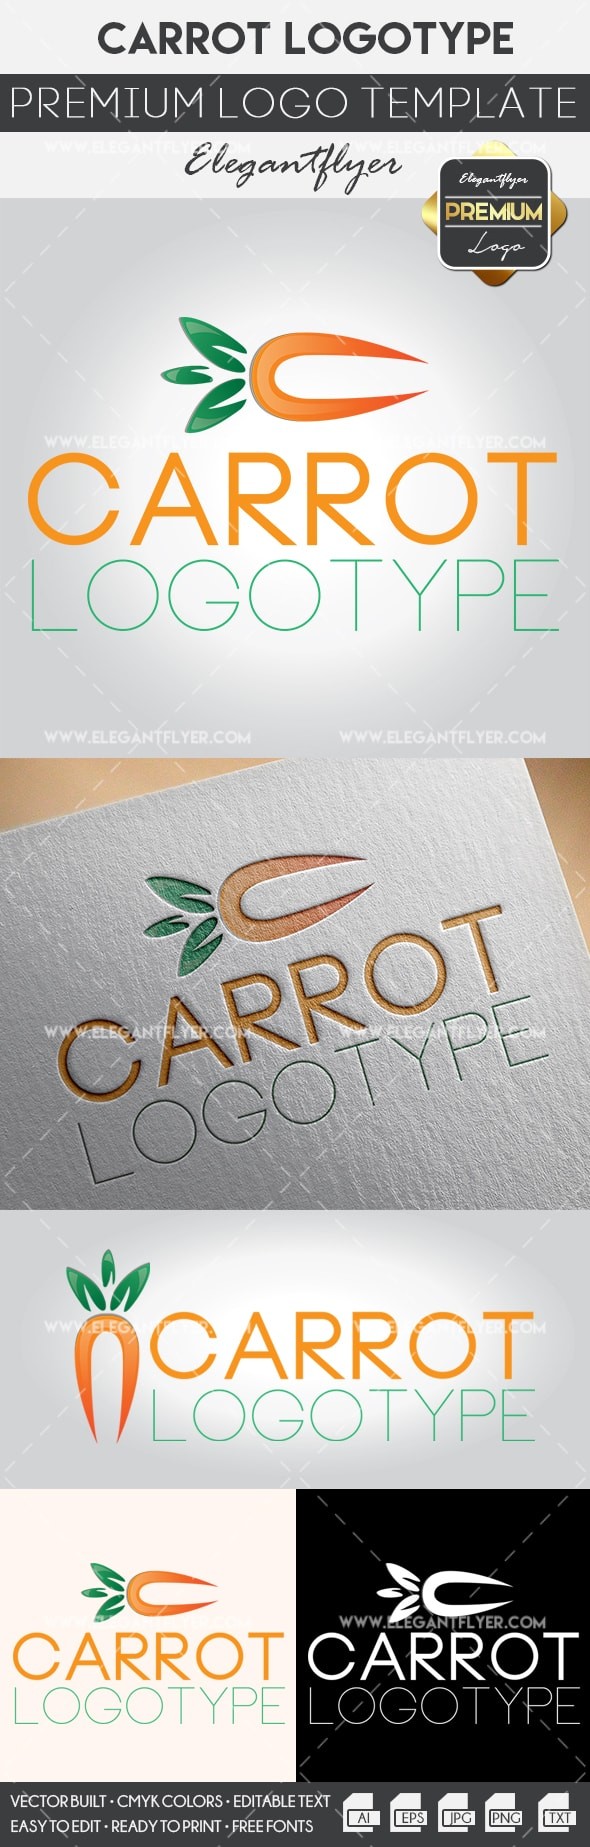 Carrot Premium Template by ElegantFlyer